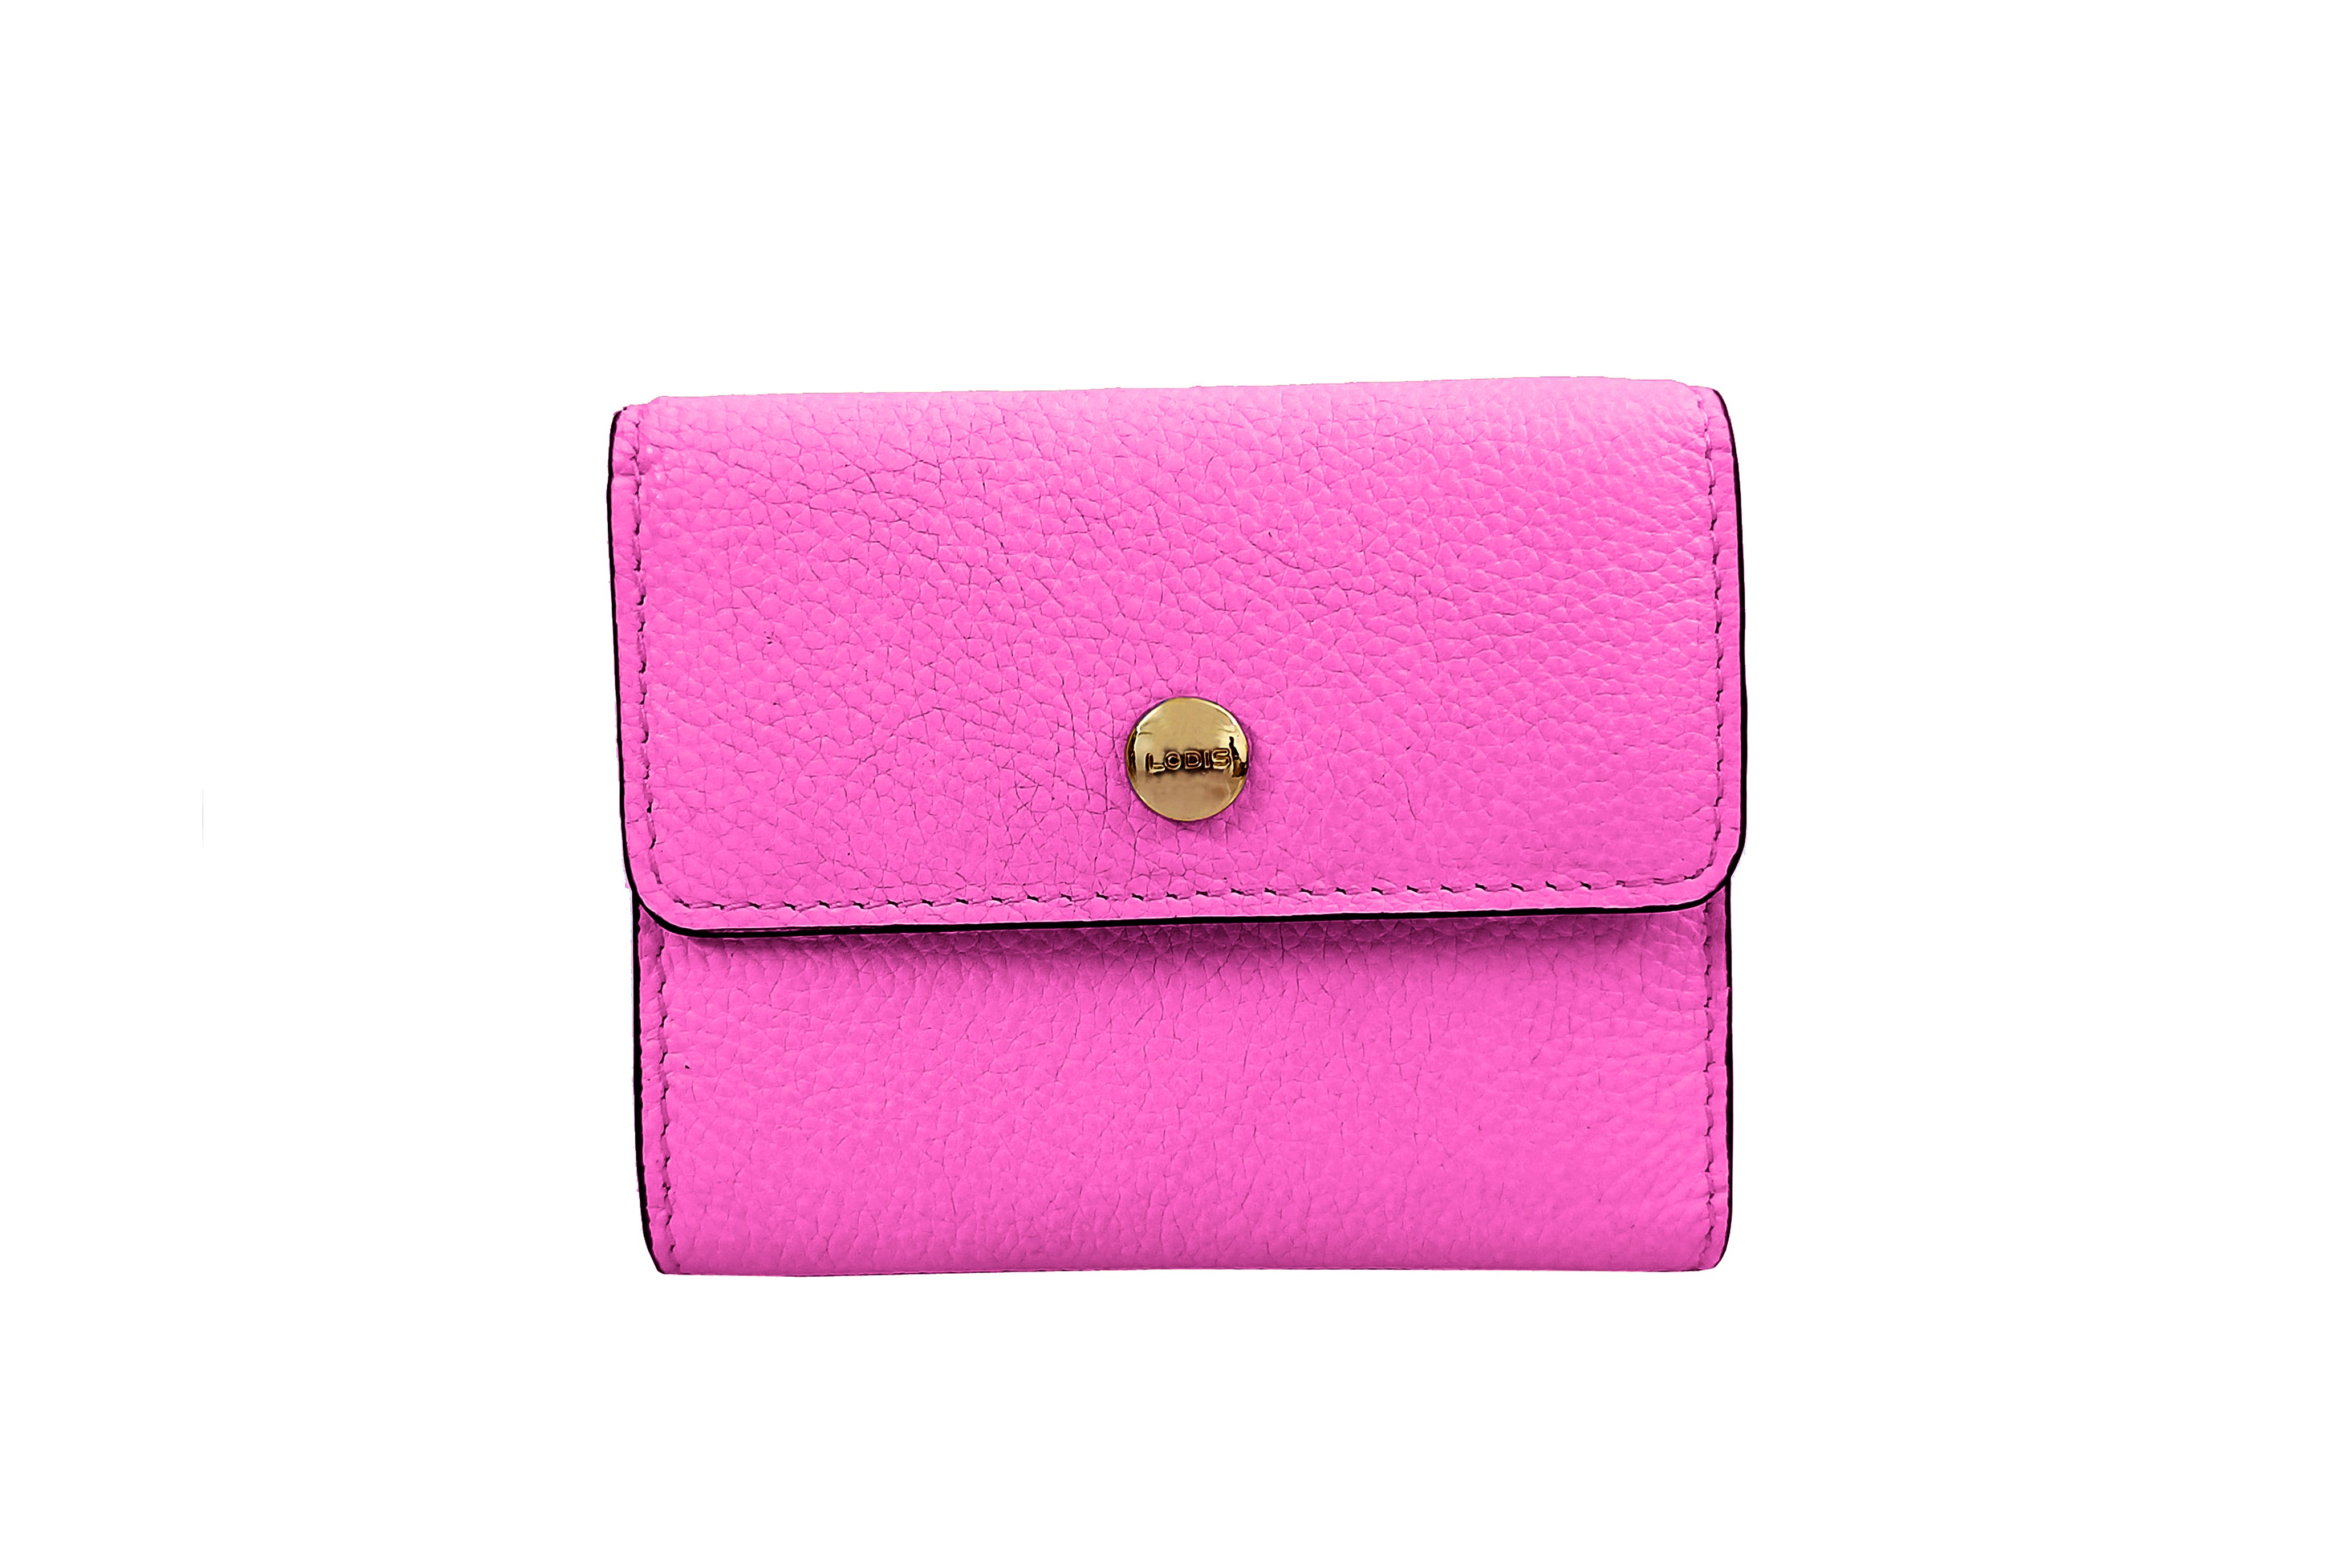 ALDO Handbags, Purses & Wallets for Women